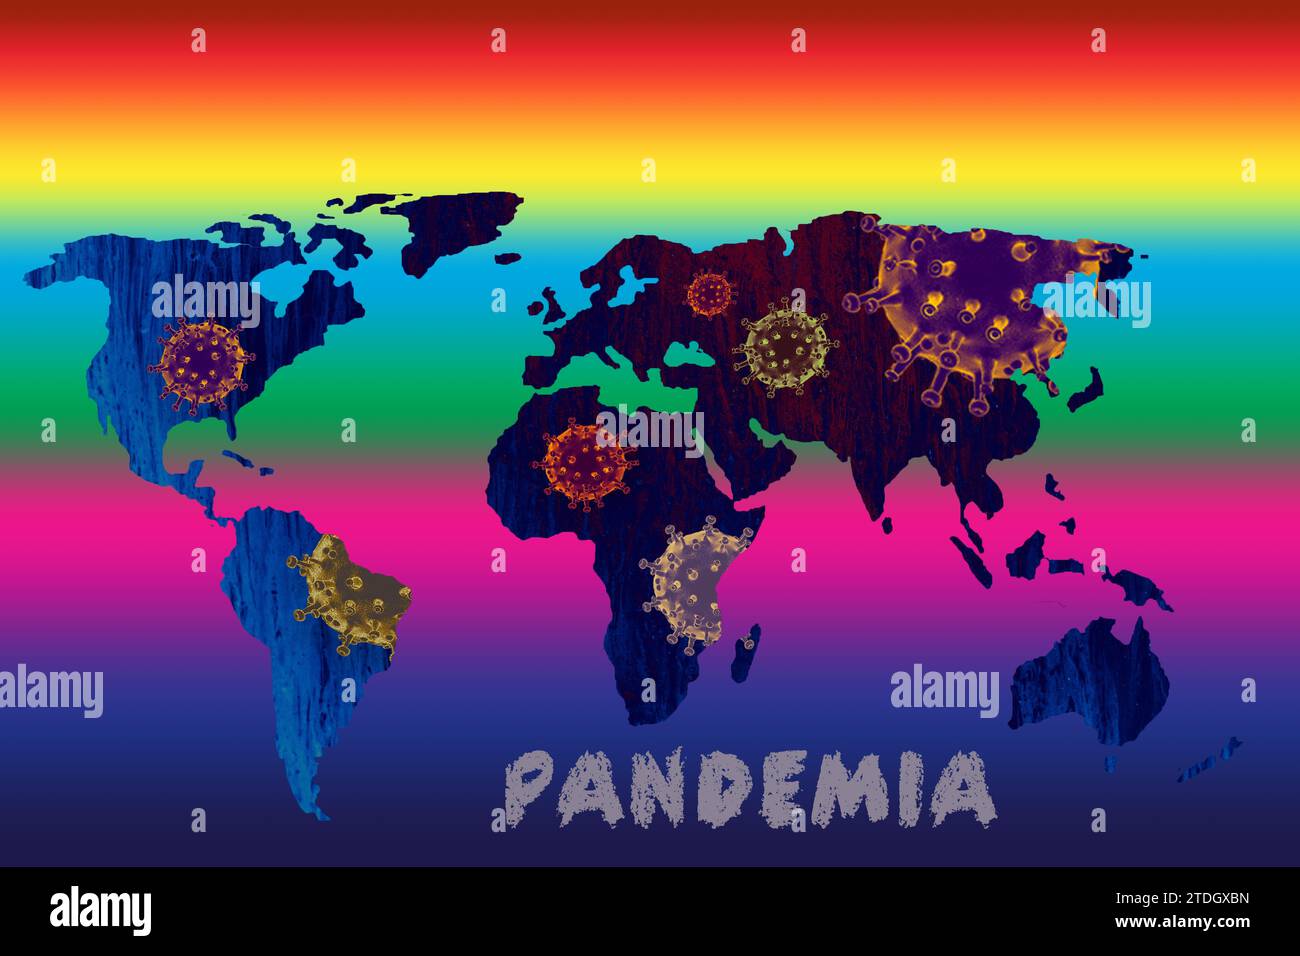 COVID-19 coronavirus epidemic infection global pandemic risk alert poster Stock Photo